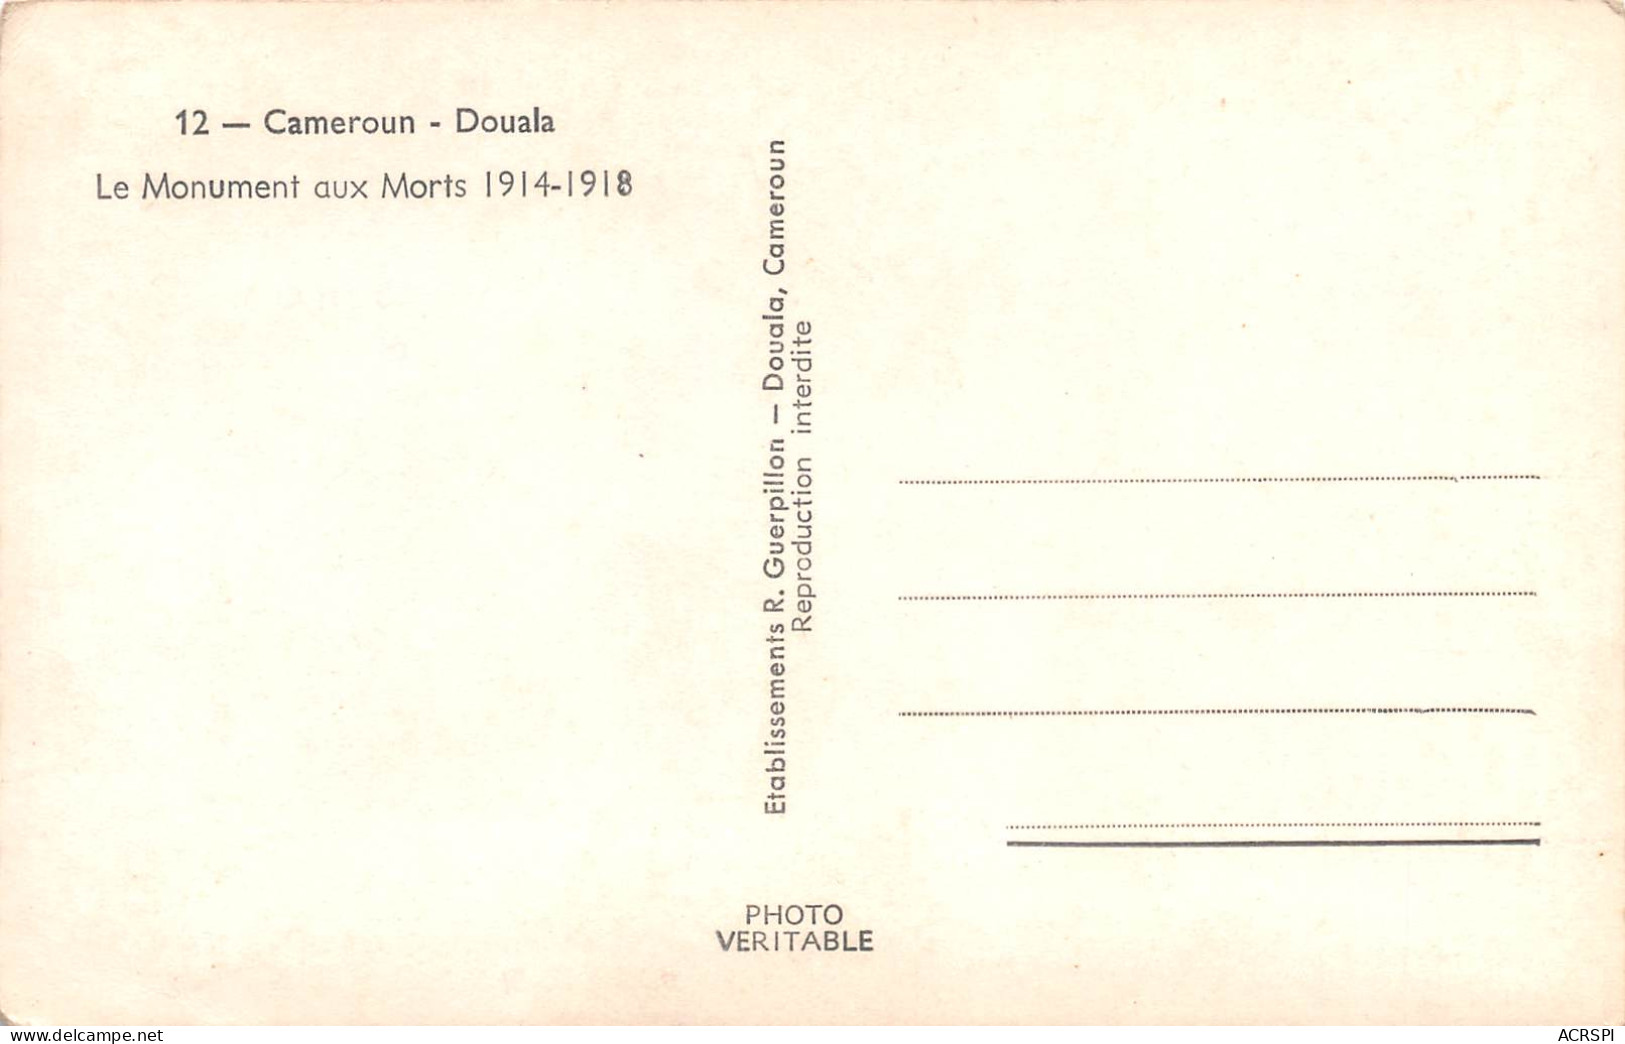 CAMEROUN DOUALA  LE MONUMENT AUX MORTS 1914-1918 Carte Vierge Non Circulé éditions Guerpillon (Scan R/V) N° 35 \MP7121 - Cameroon